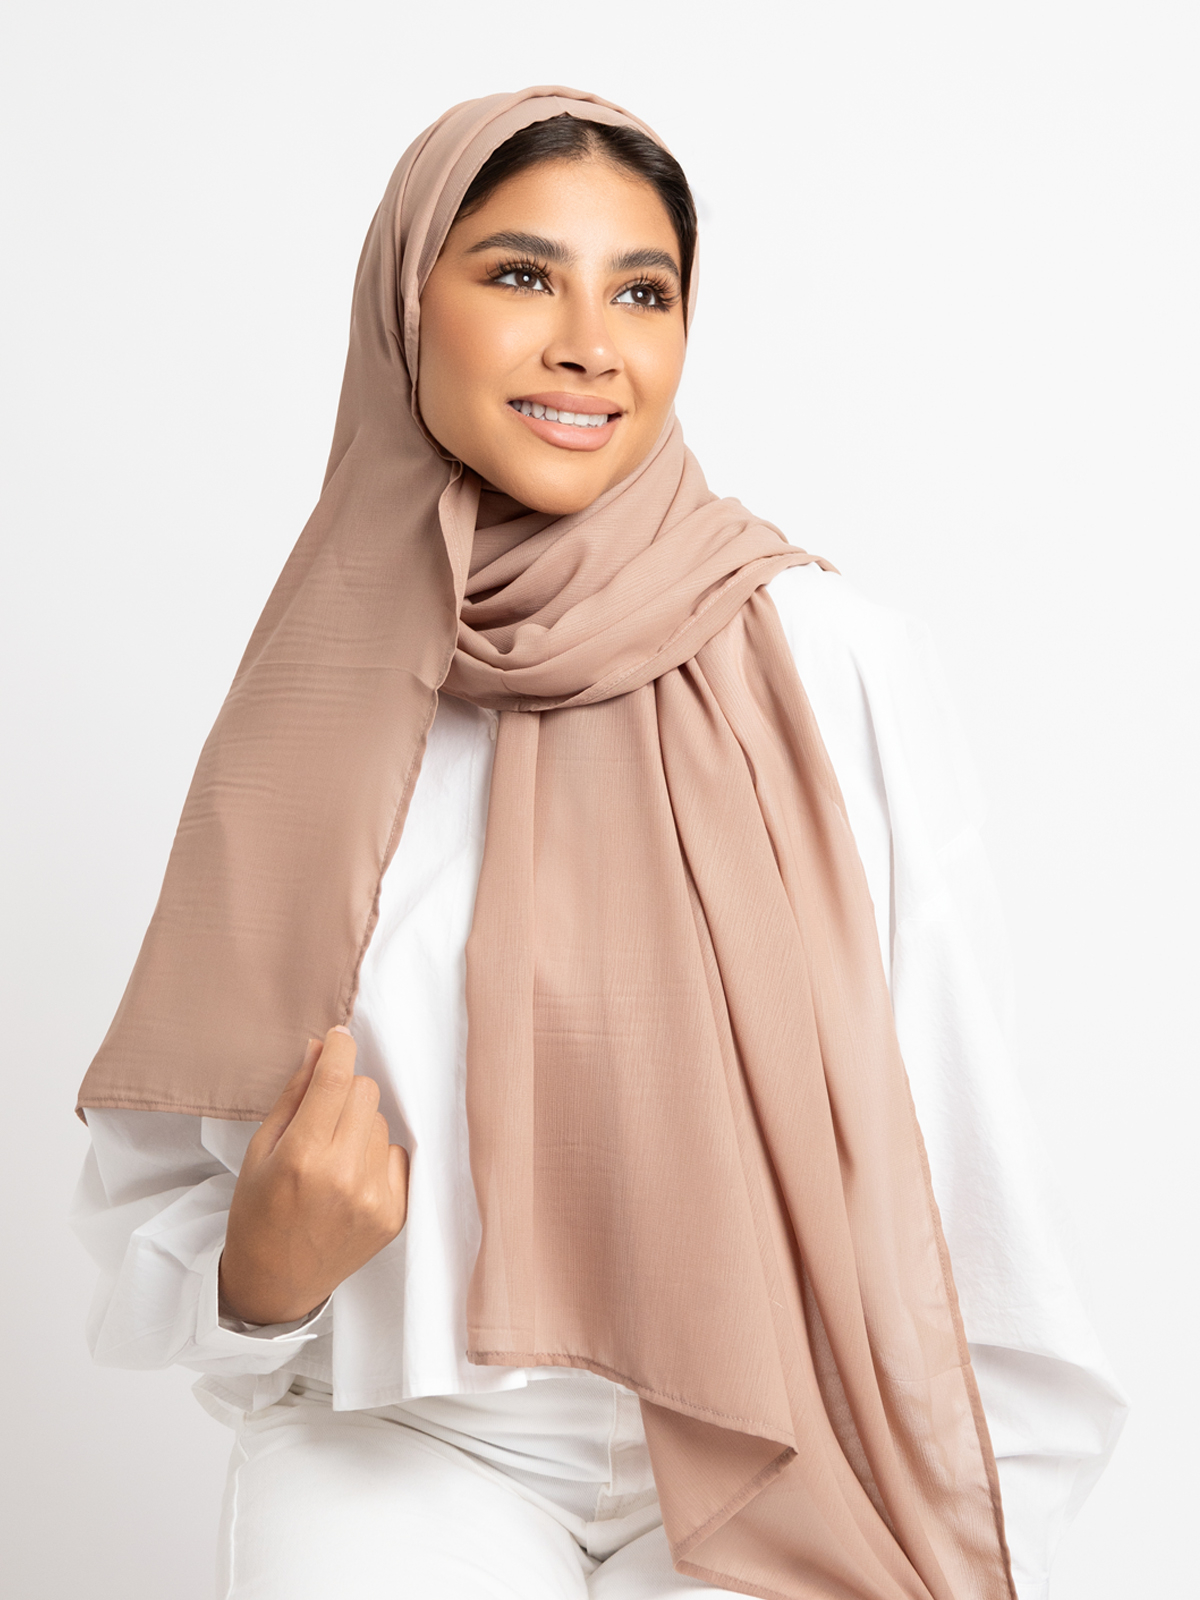 Luxurious chiffon hijab plain tarha 200 cm long beige color high quality material online in ksa by kaafmeem